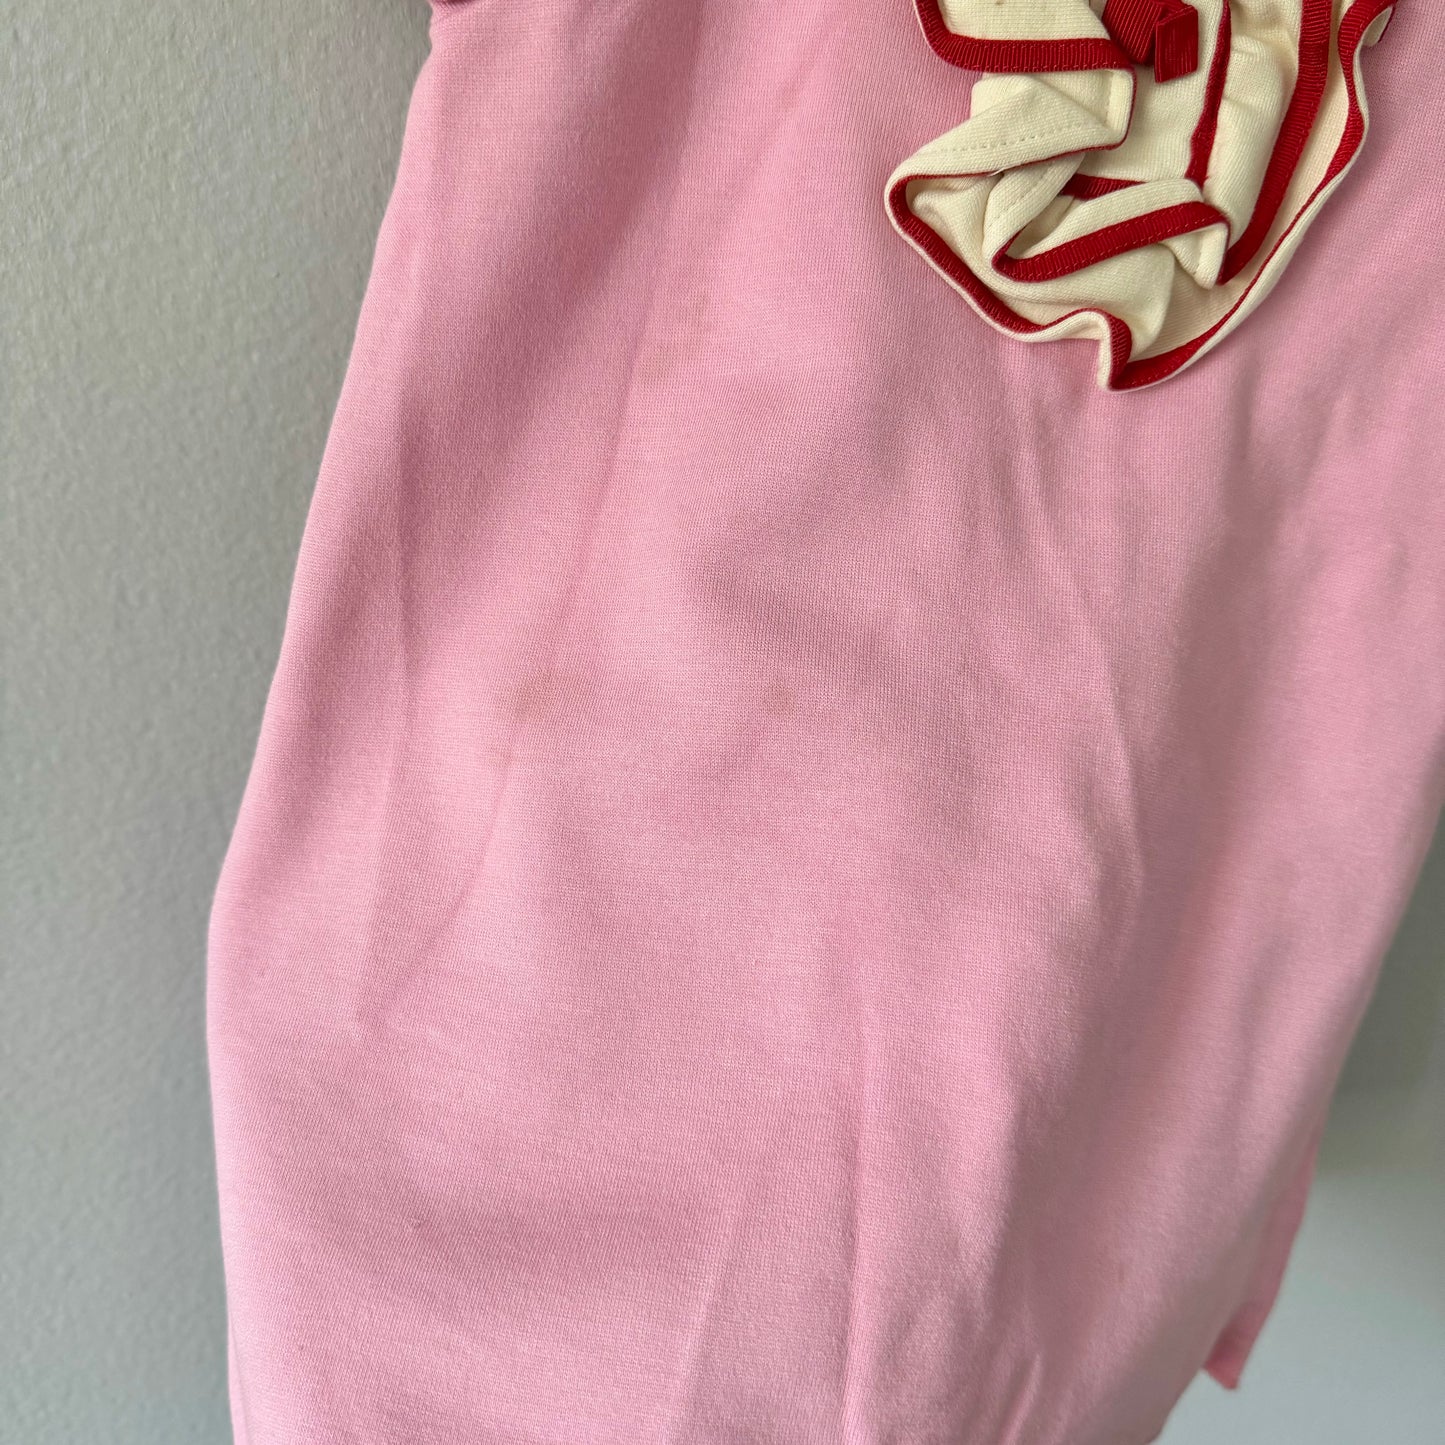 Gucci / Pink dress / 18-24M